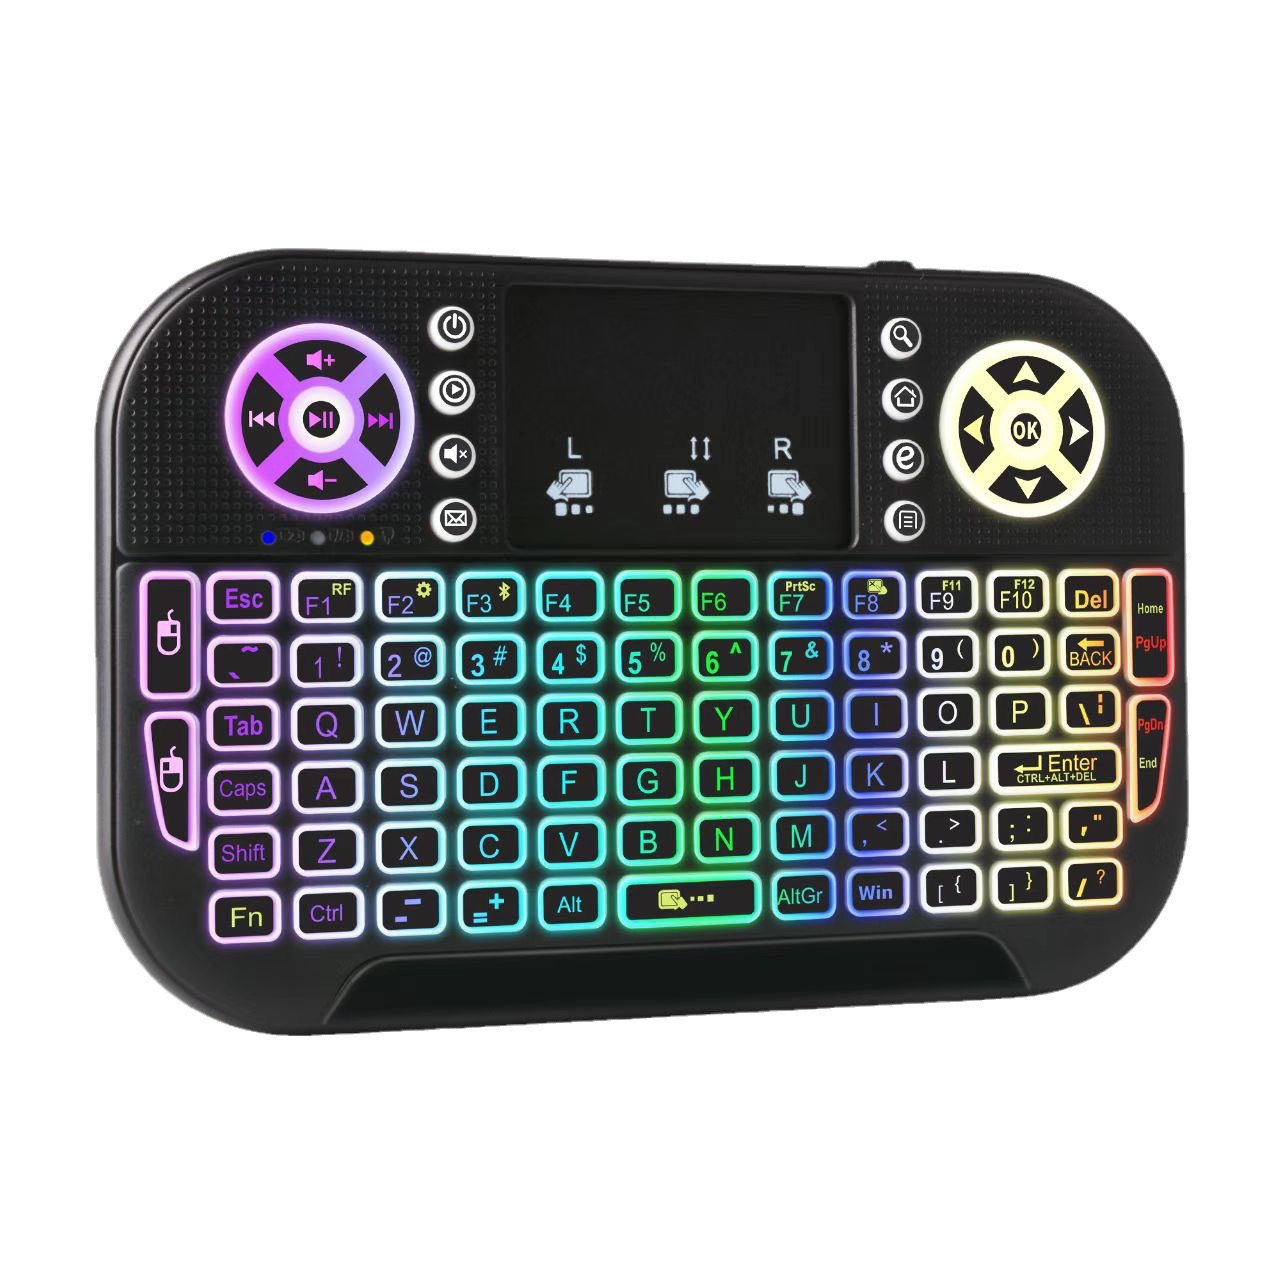 SuperBox Mini Wireless Keyboard with Touchpad